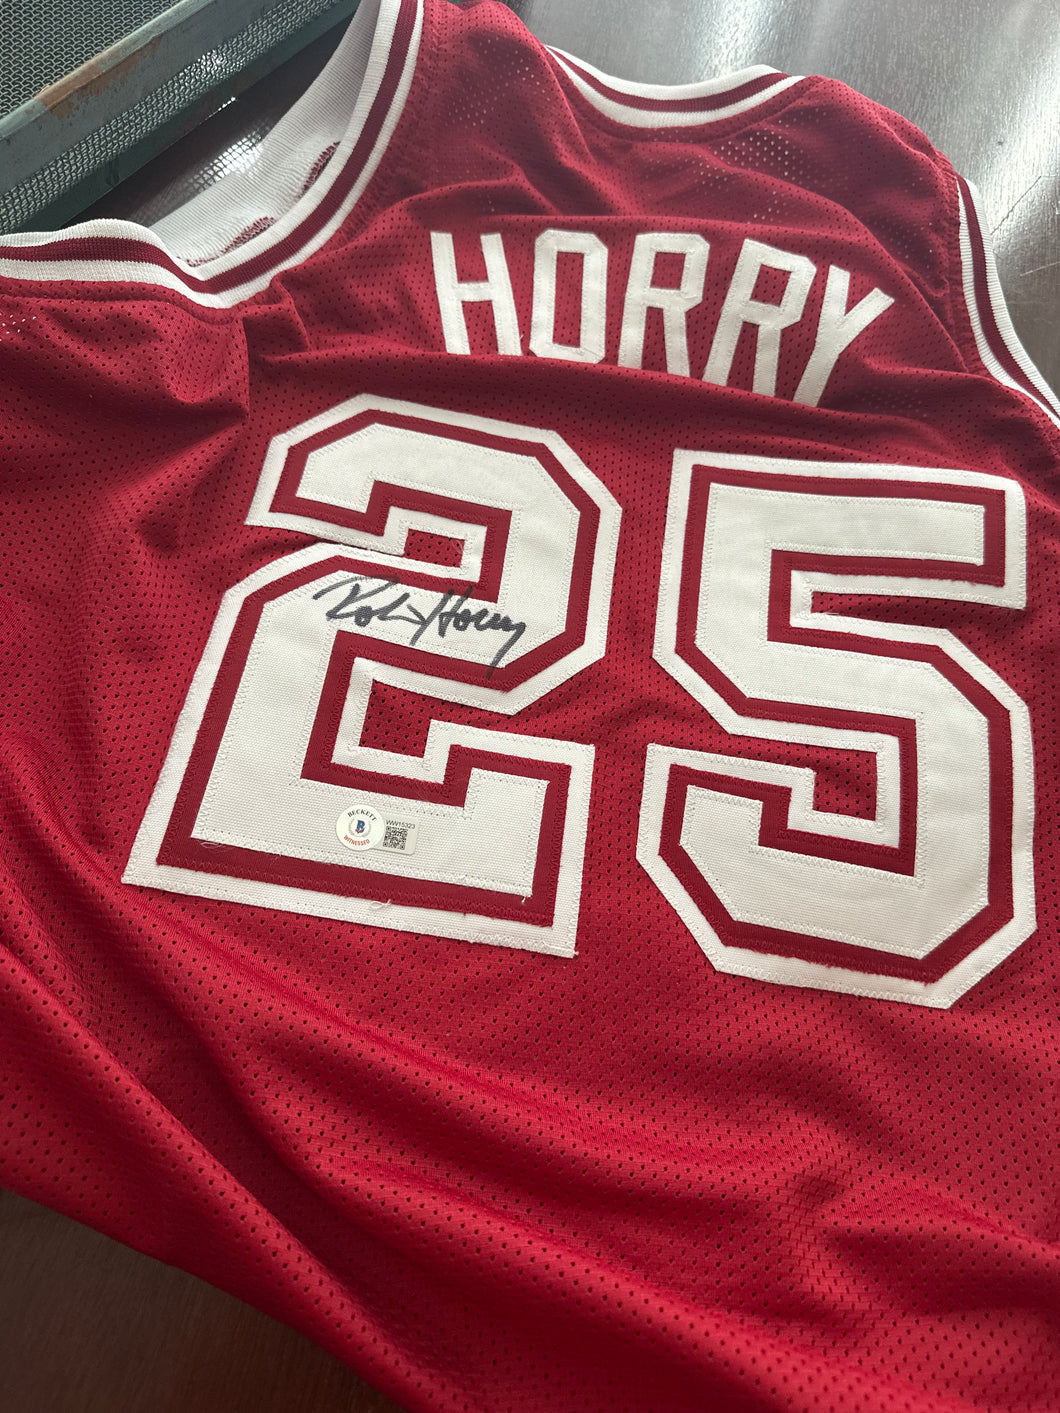 Robert Horry Alabama Basketball Autographed Jersey XL Collectible